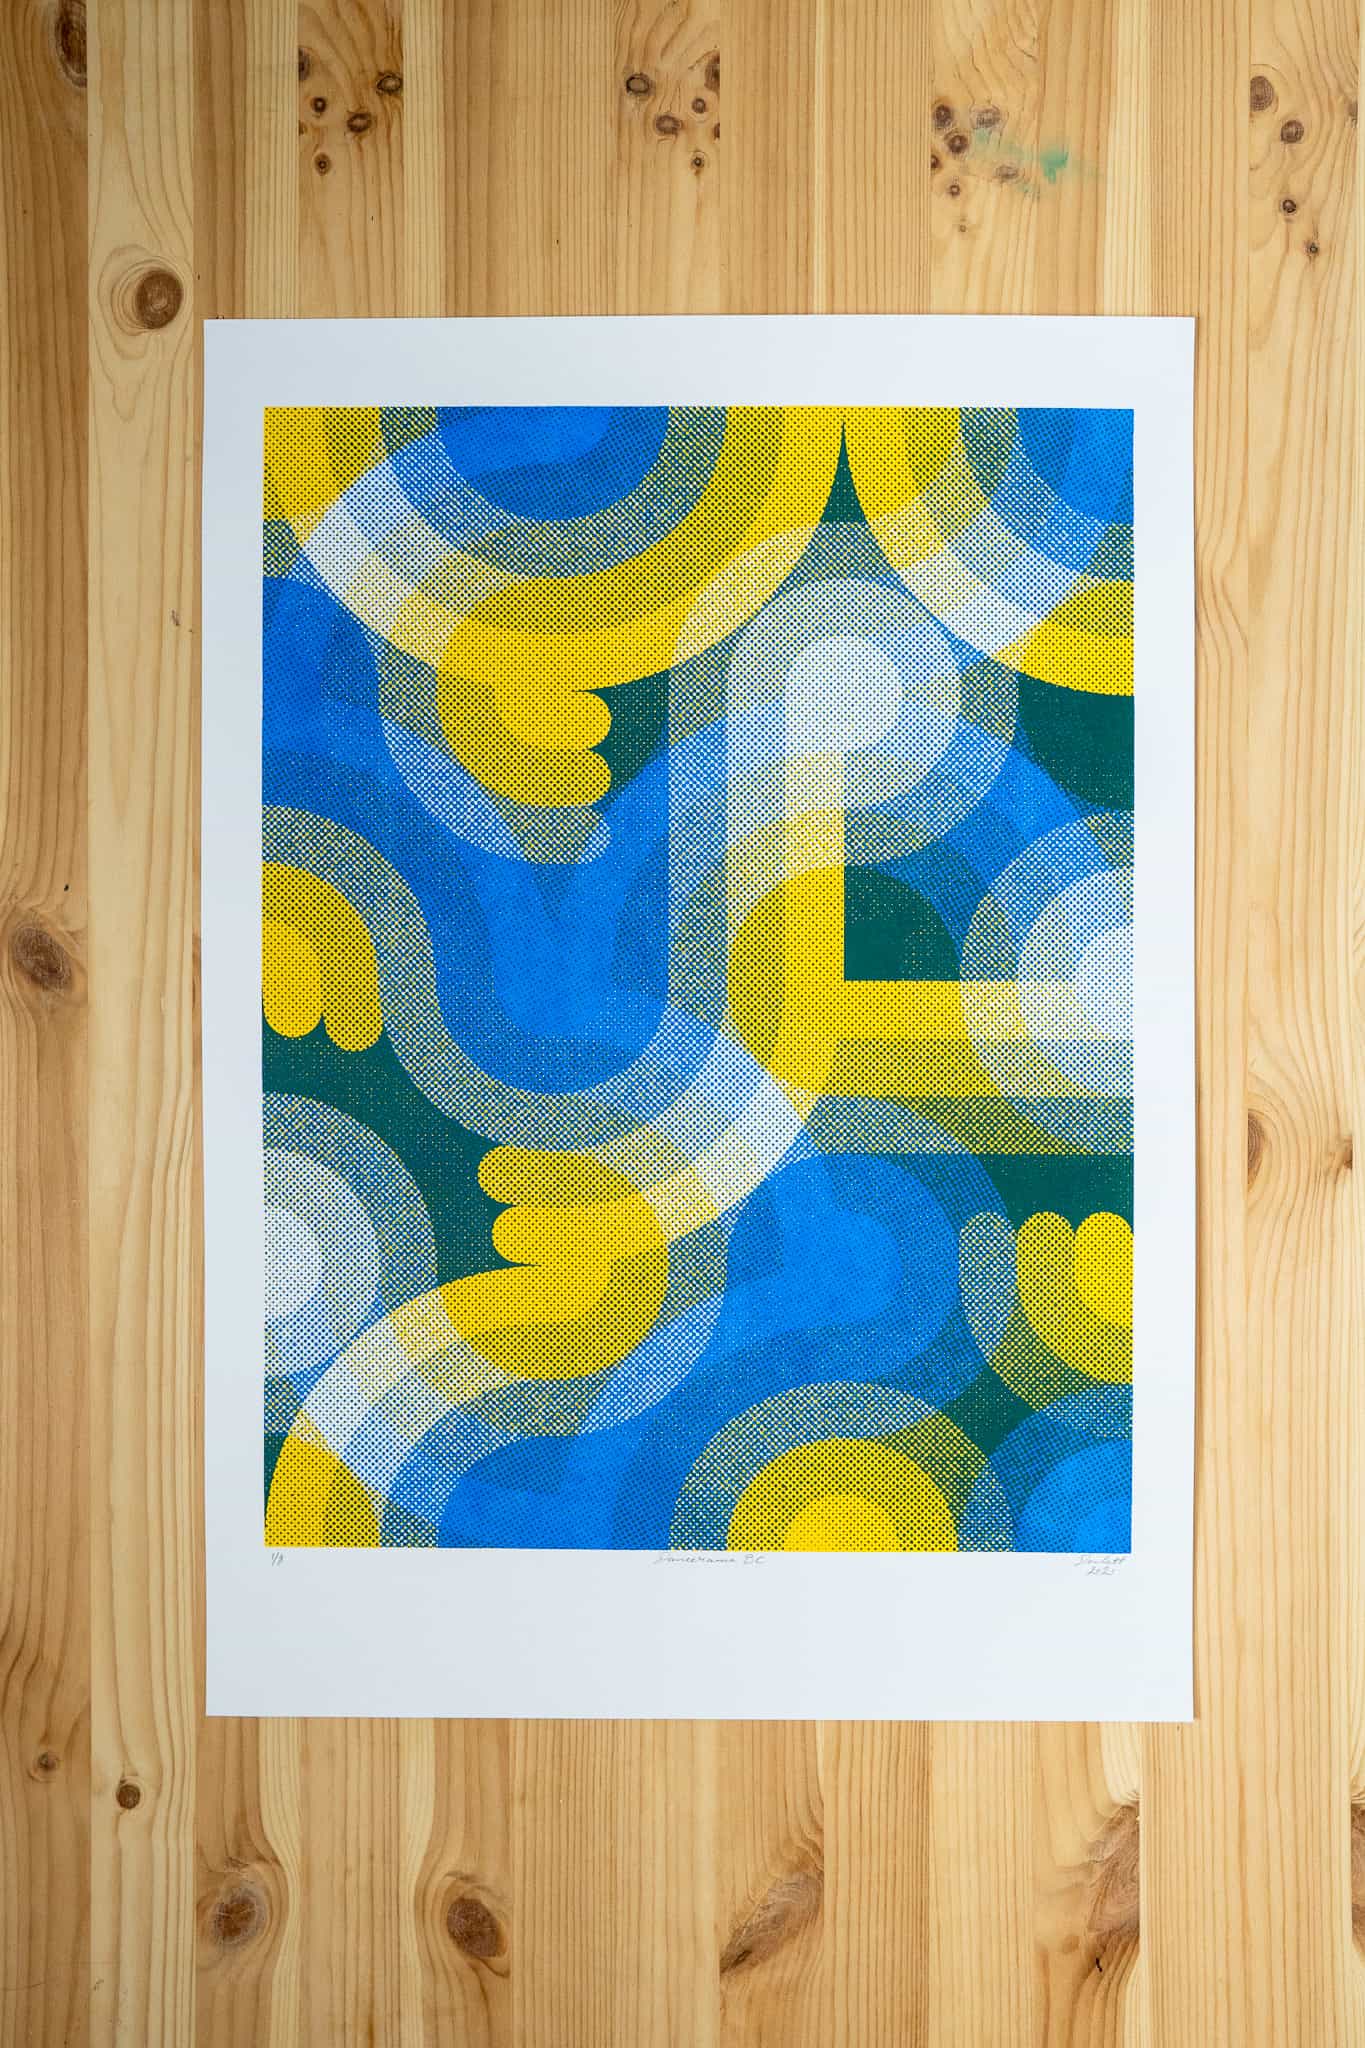 80s Pop: Dancerama - Yellow + Blue - Test and Misprints, Screen Print